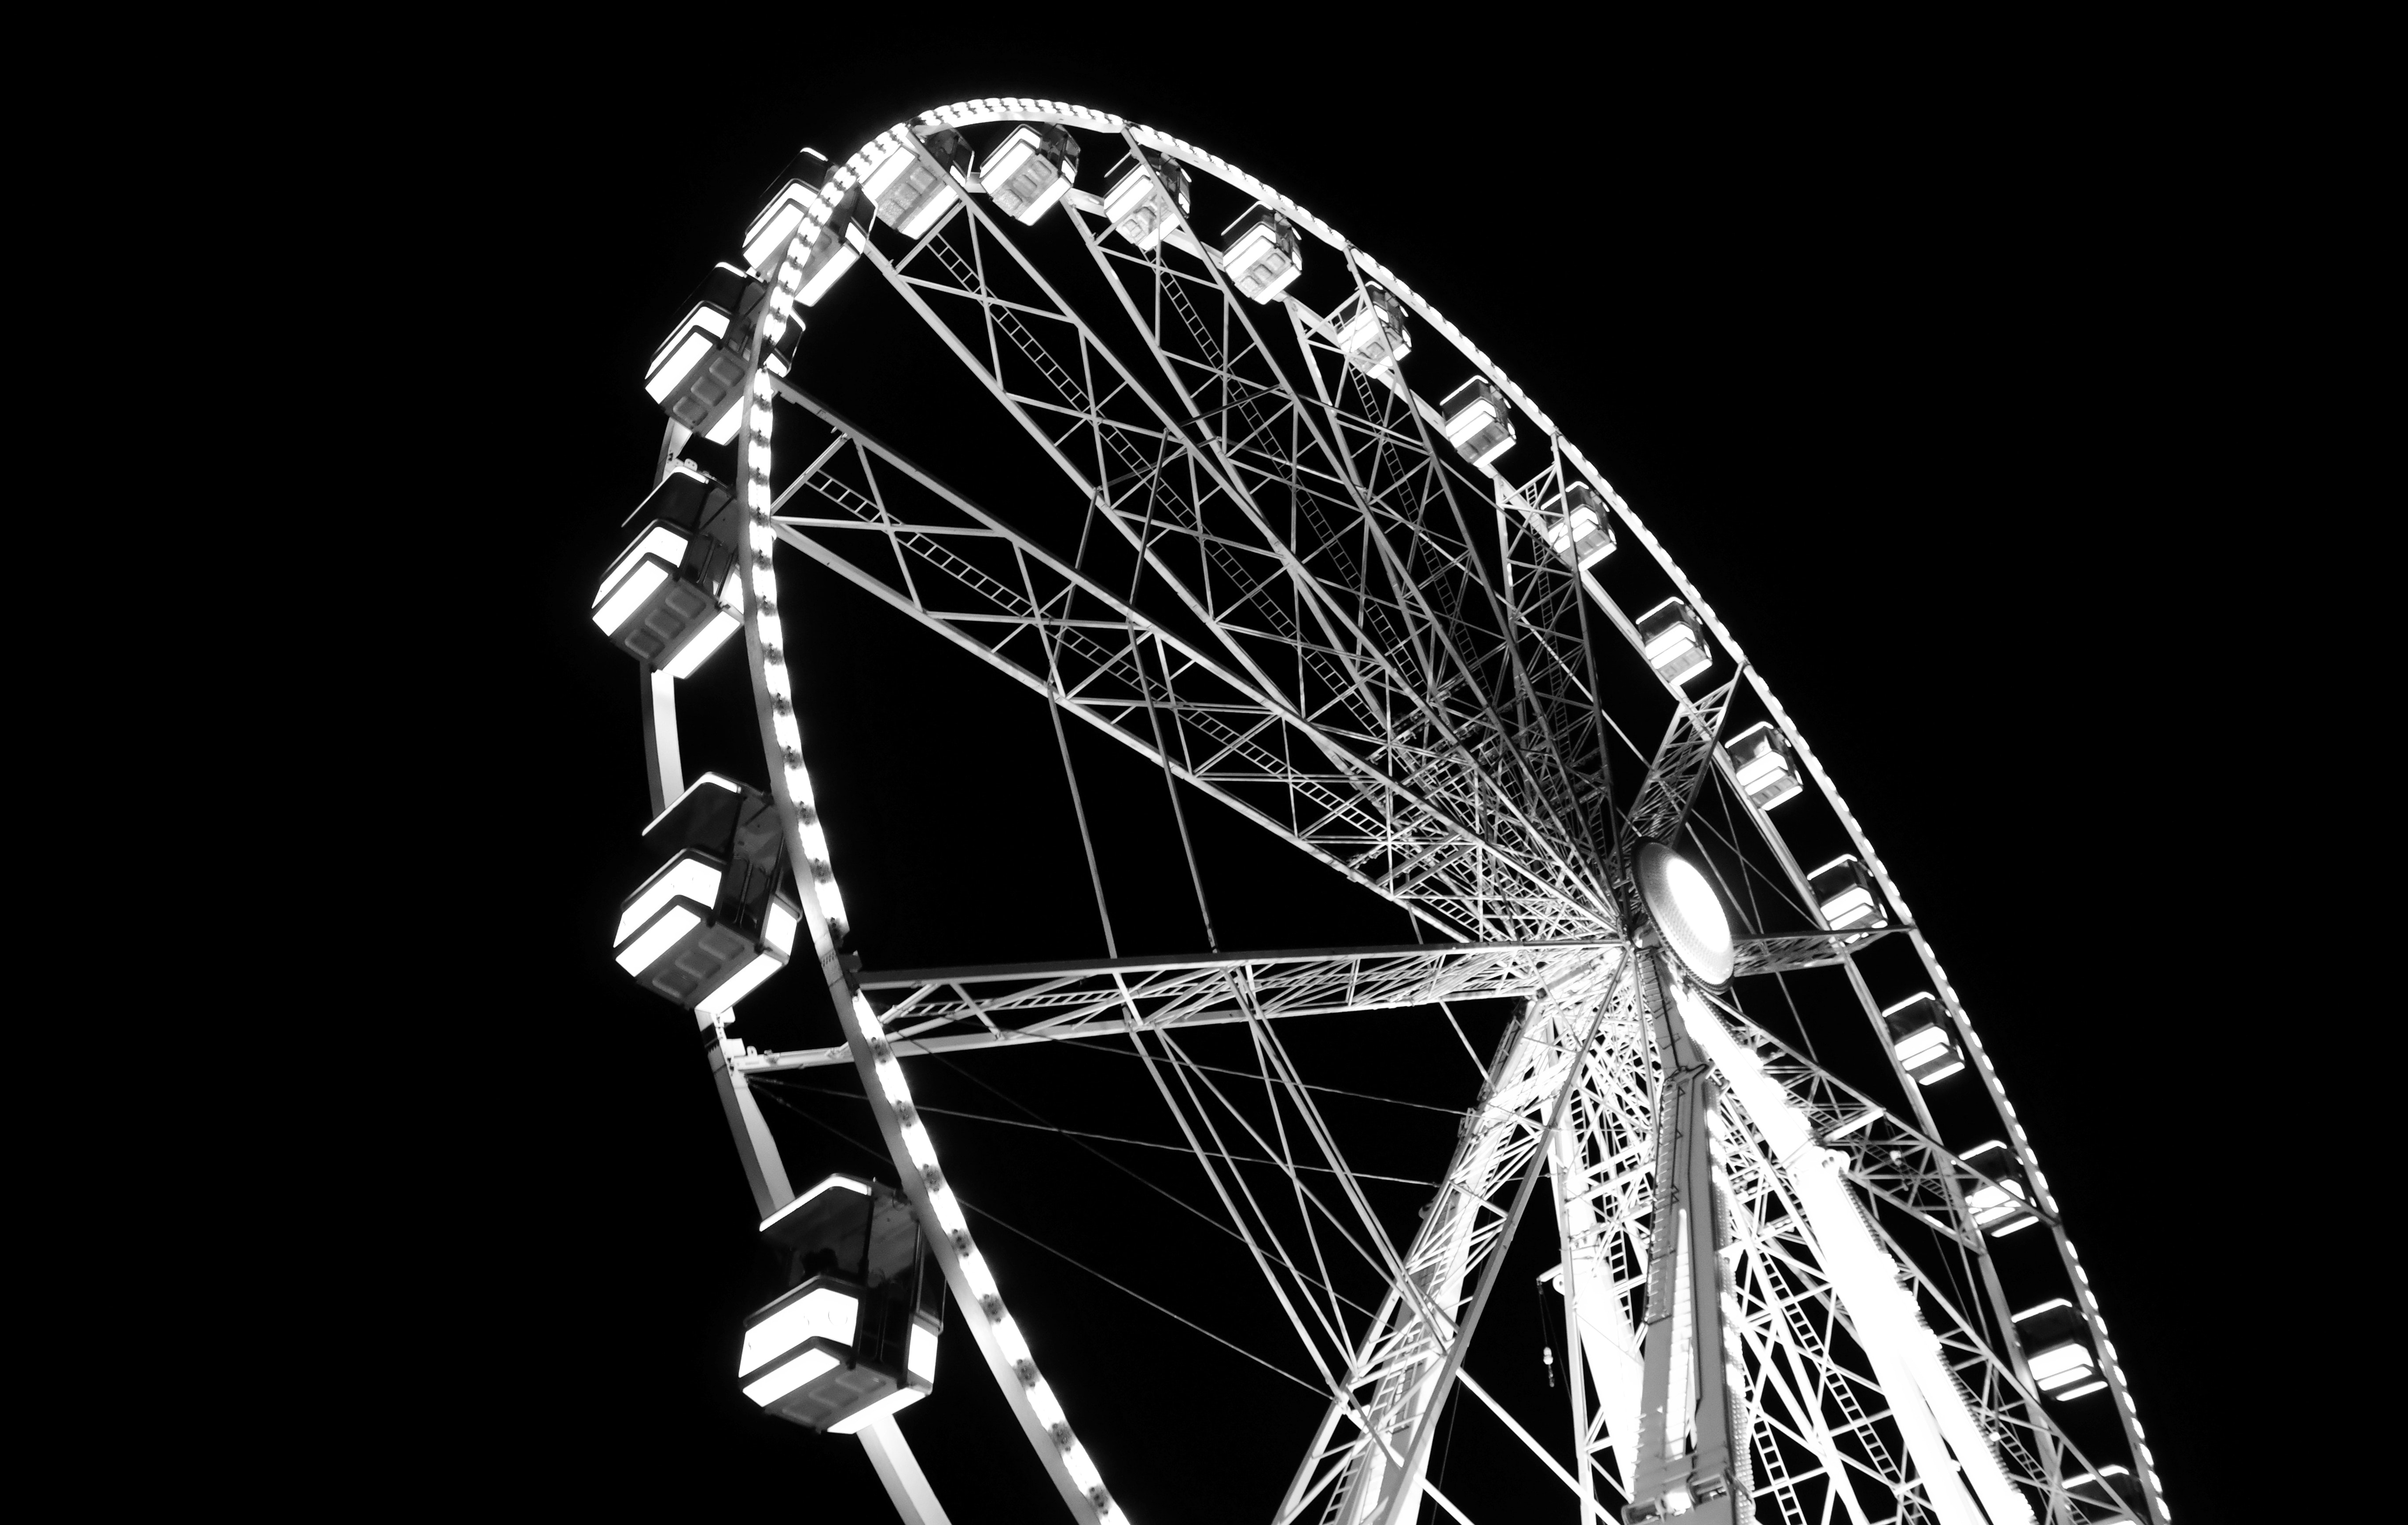 Monochrome photography of ferris wheel